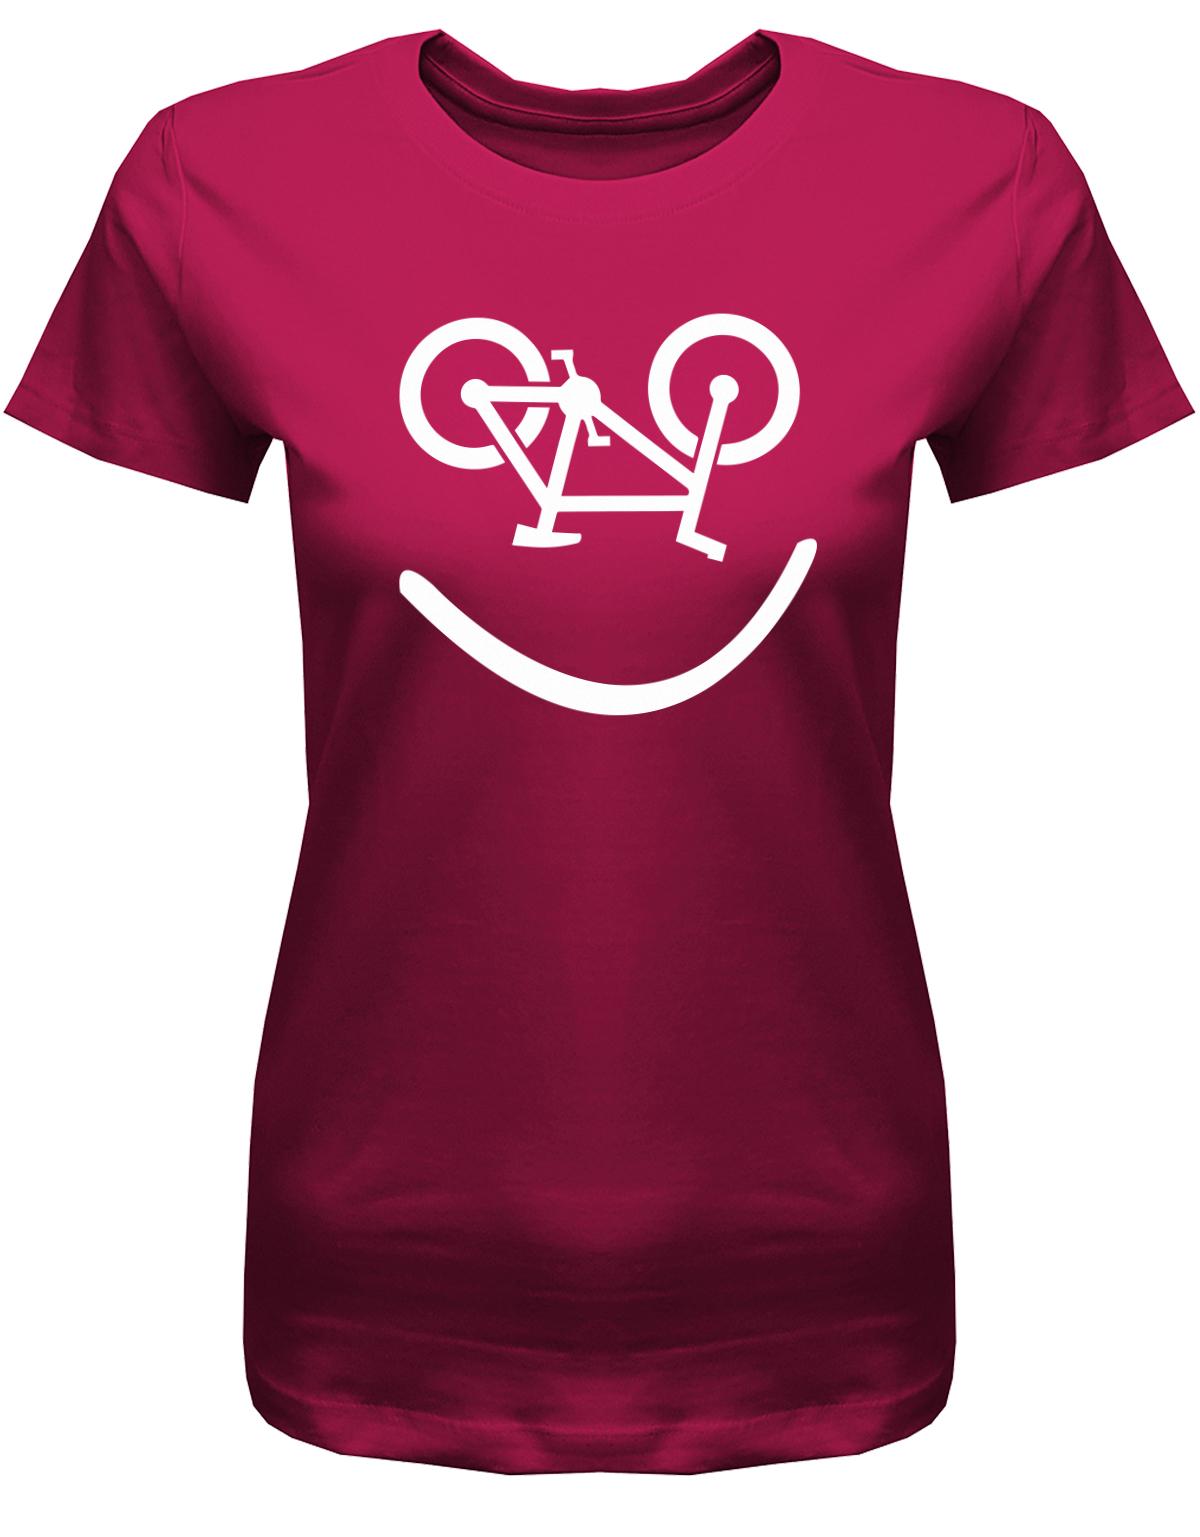 Biker-Smiley-Damen-Shirt-Sorbet